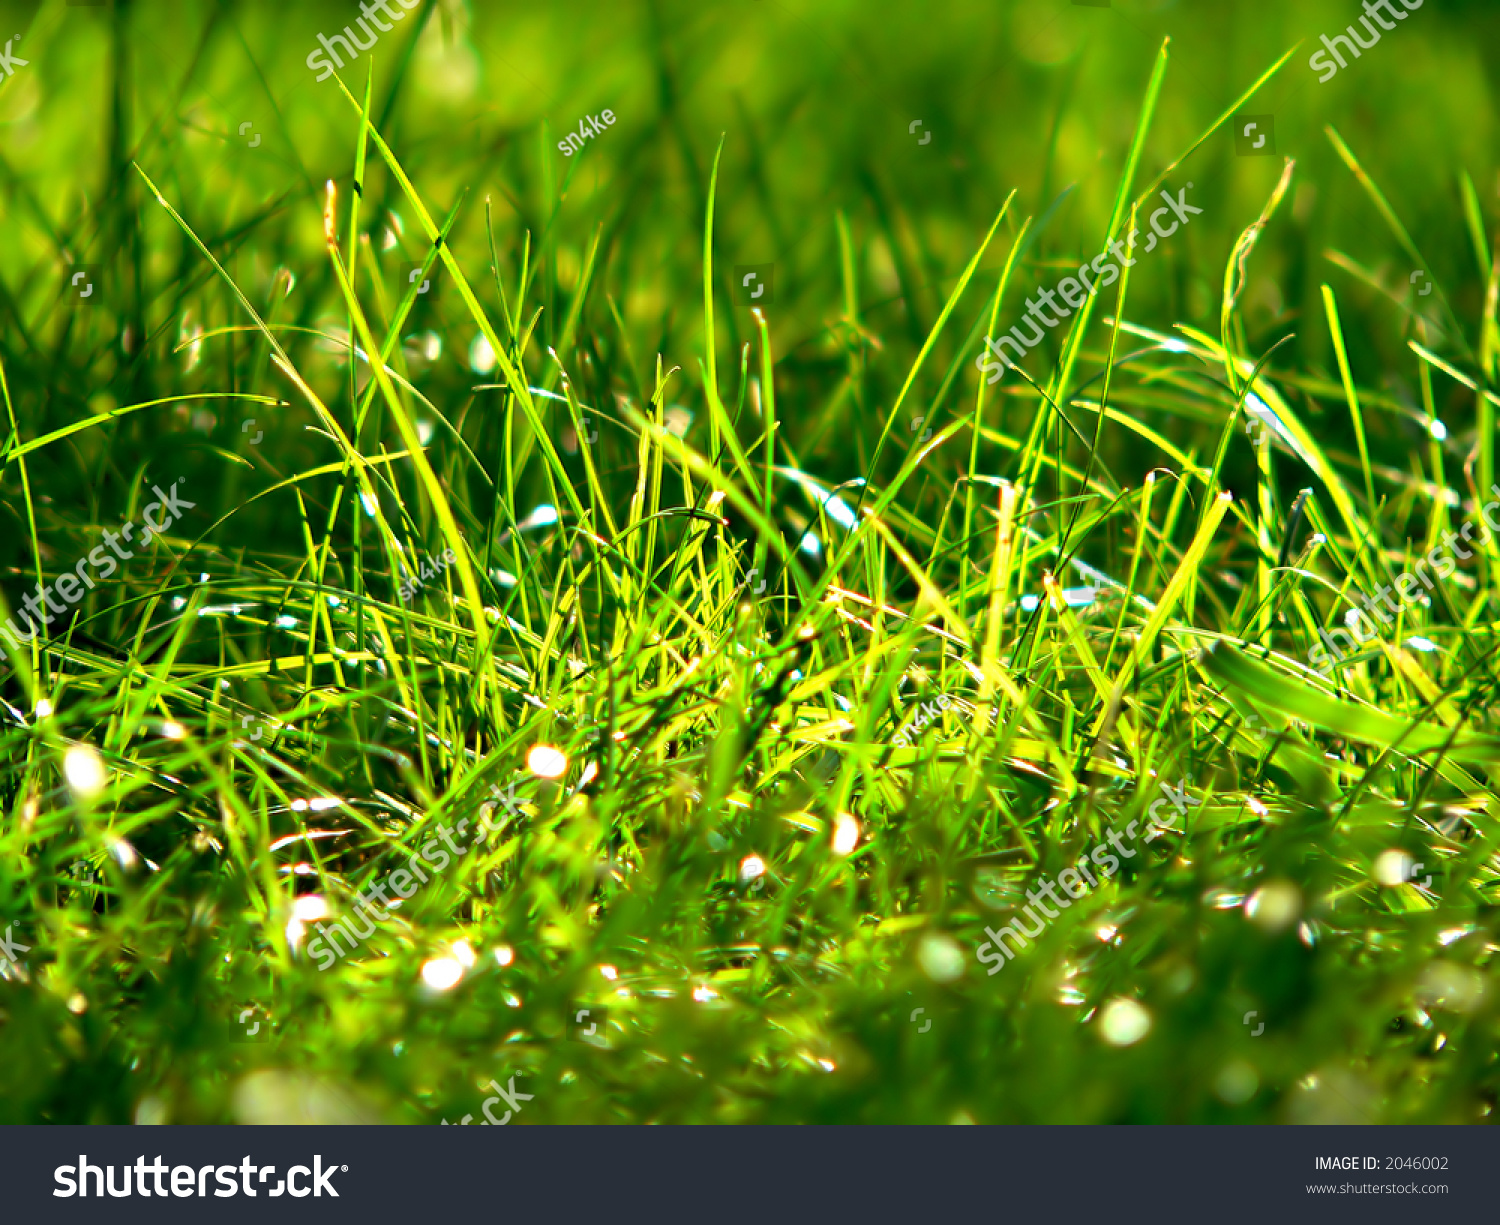 Dewy Grass Close-Up Stock Photo 2046002 : Shutterstock